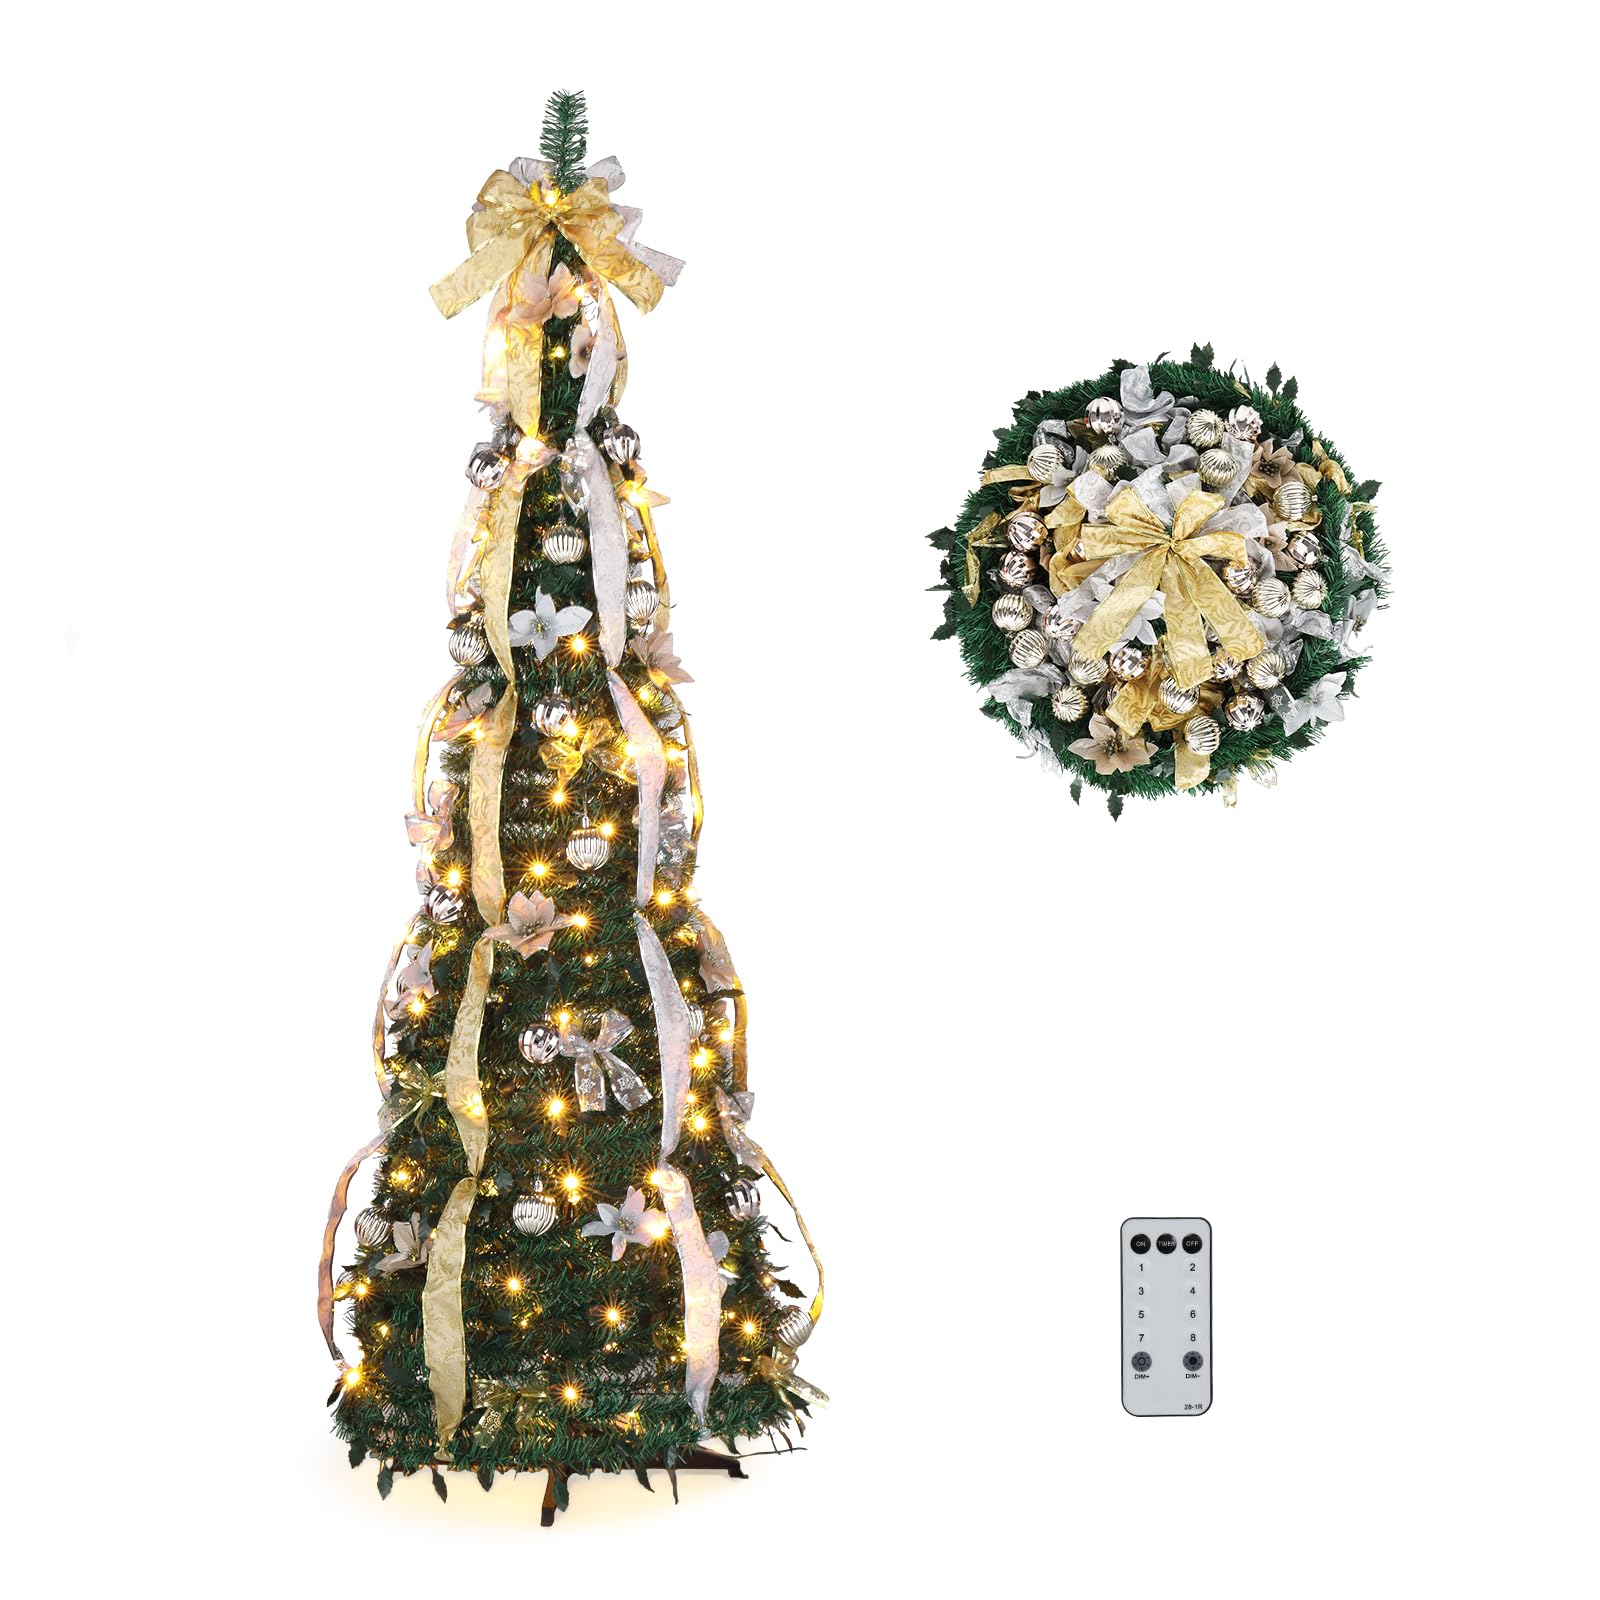 VINGLI Pop up Artificial Christmas Pine Tree